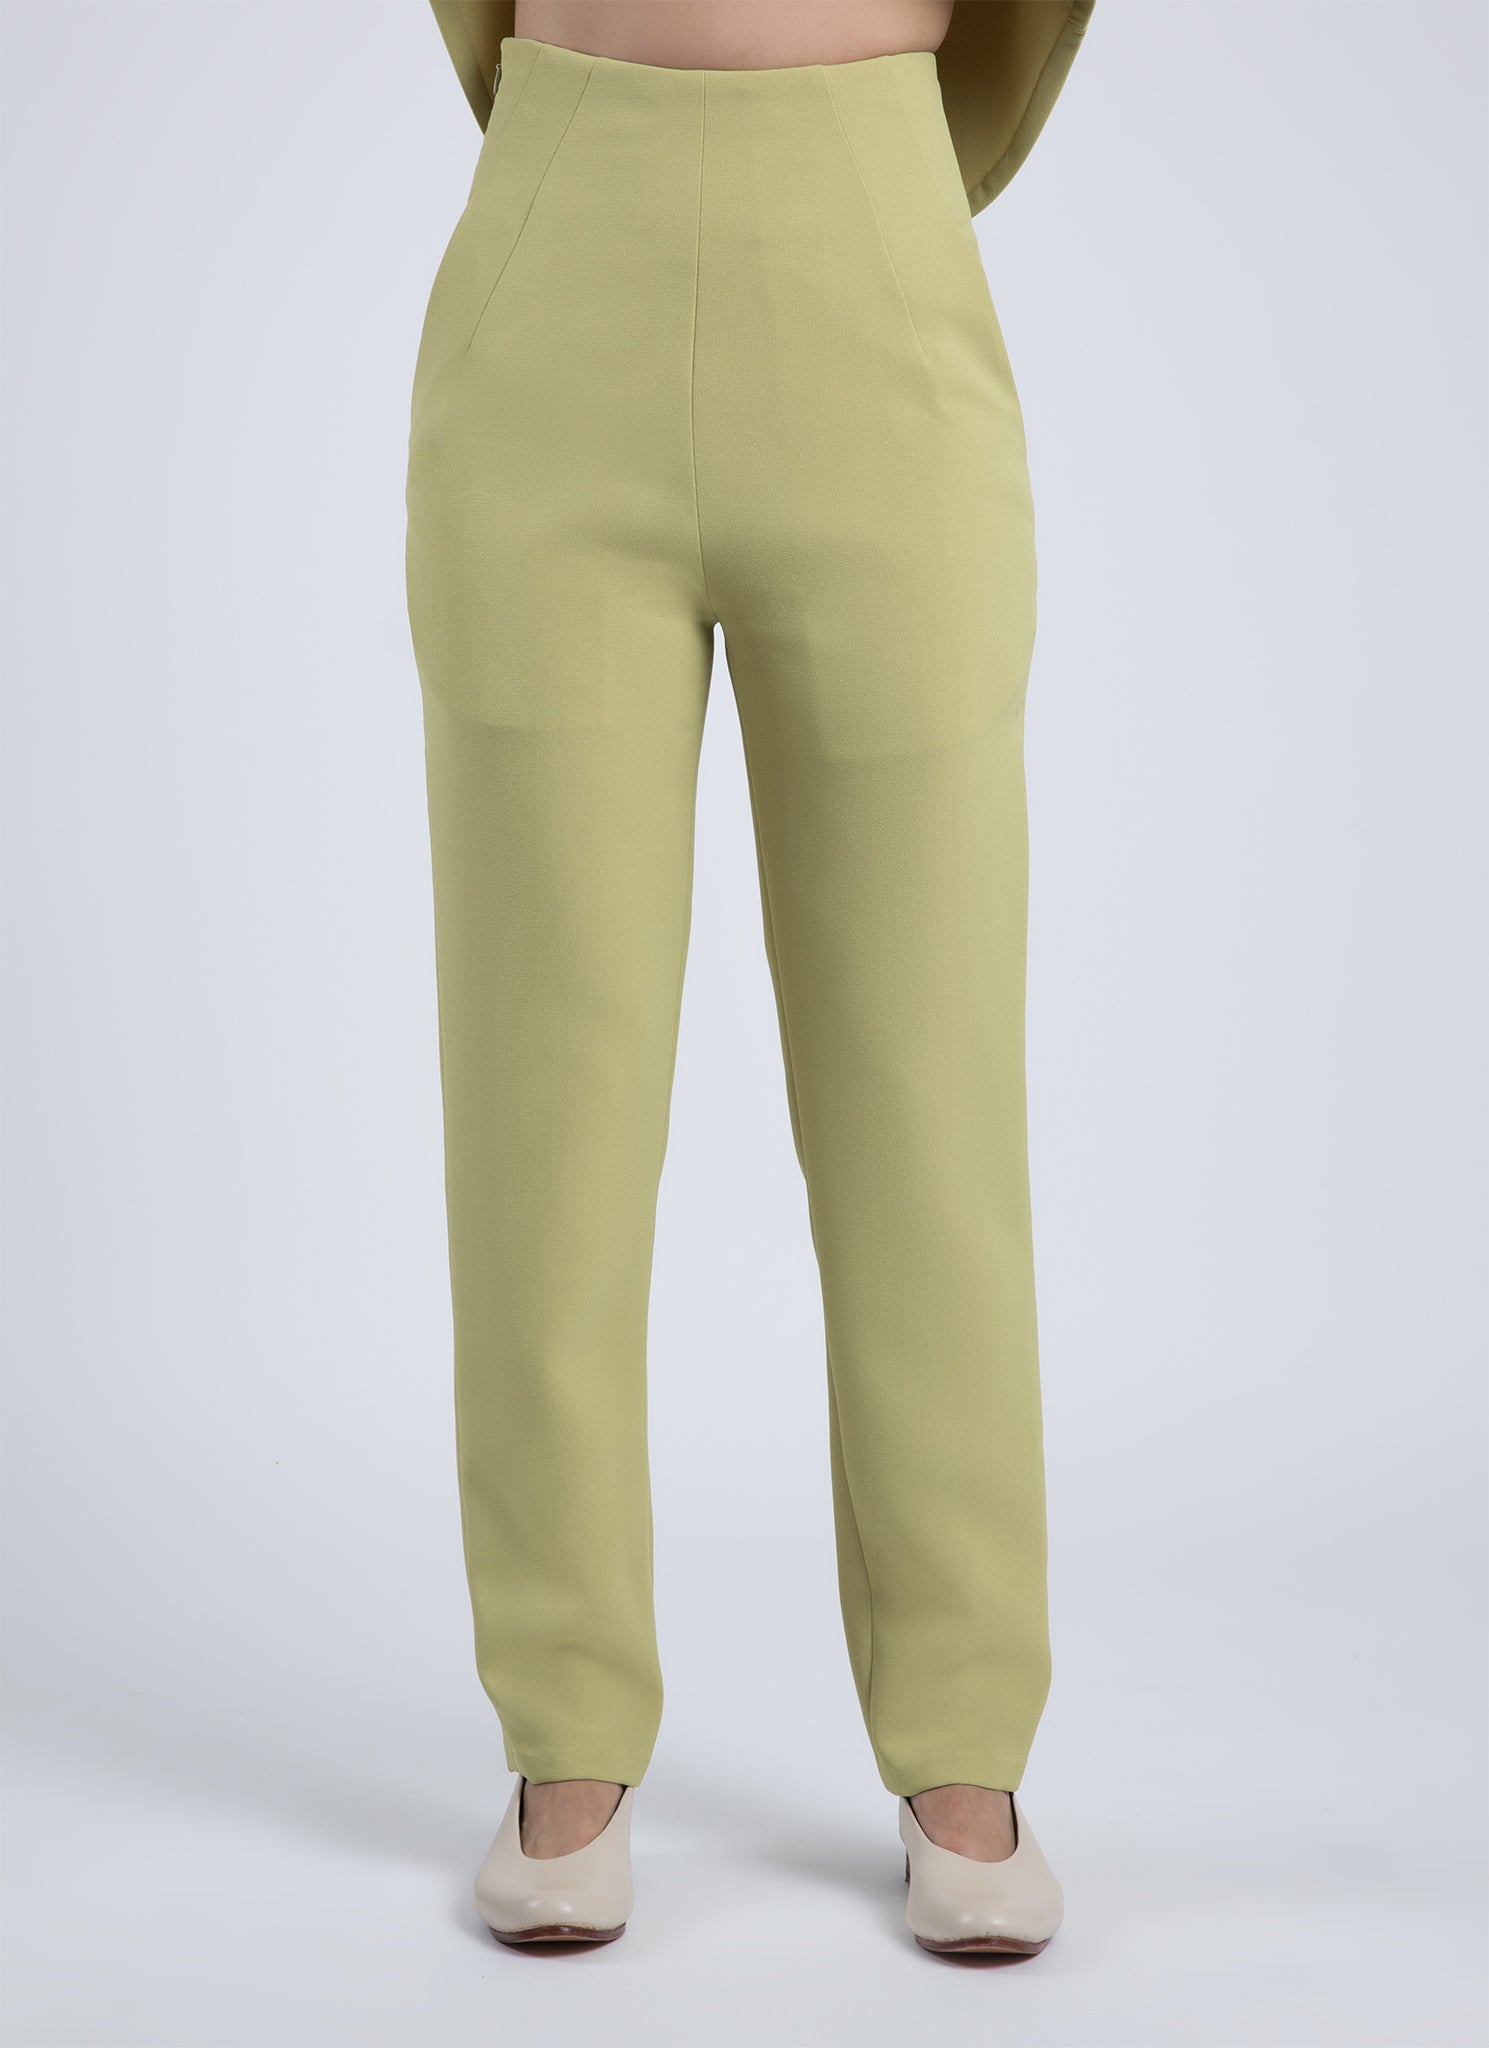 KAAREM - Sam High-Waisted Pocket Pant - Yellow